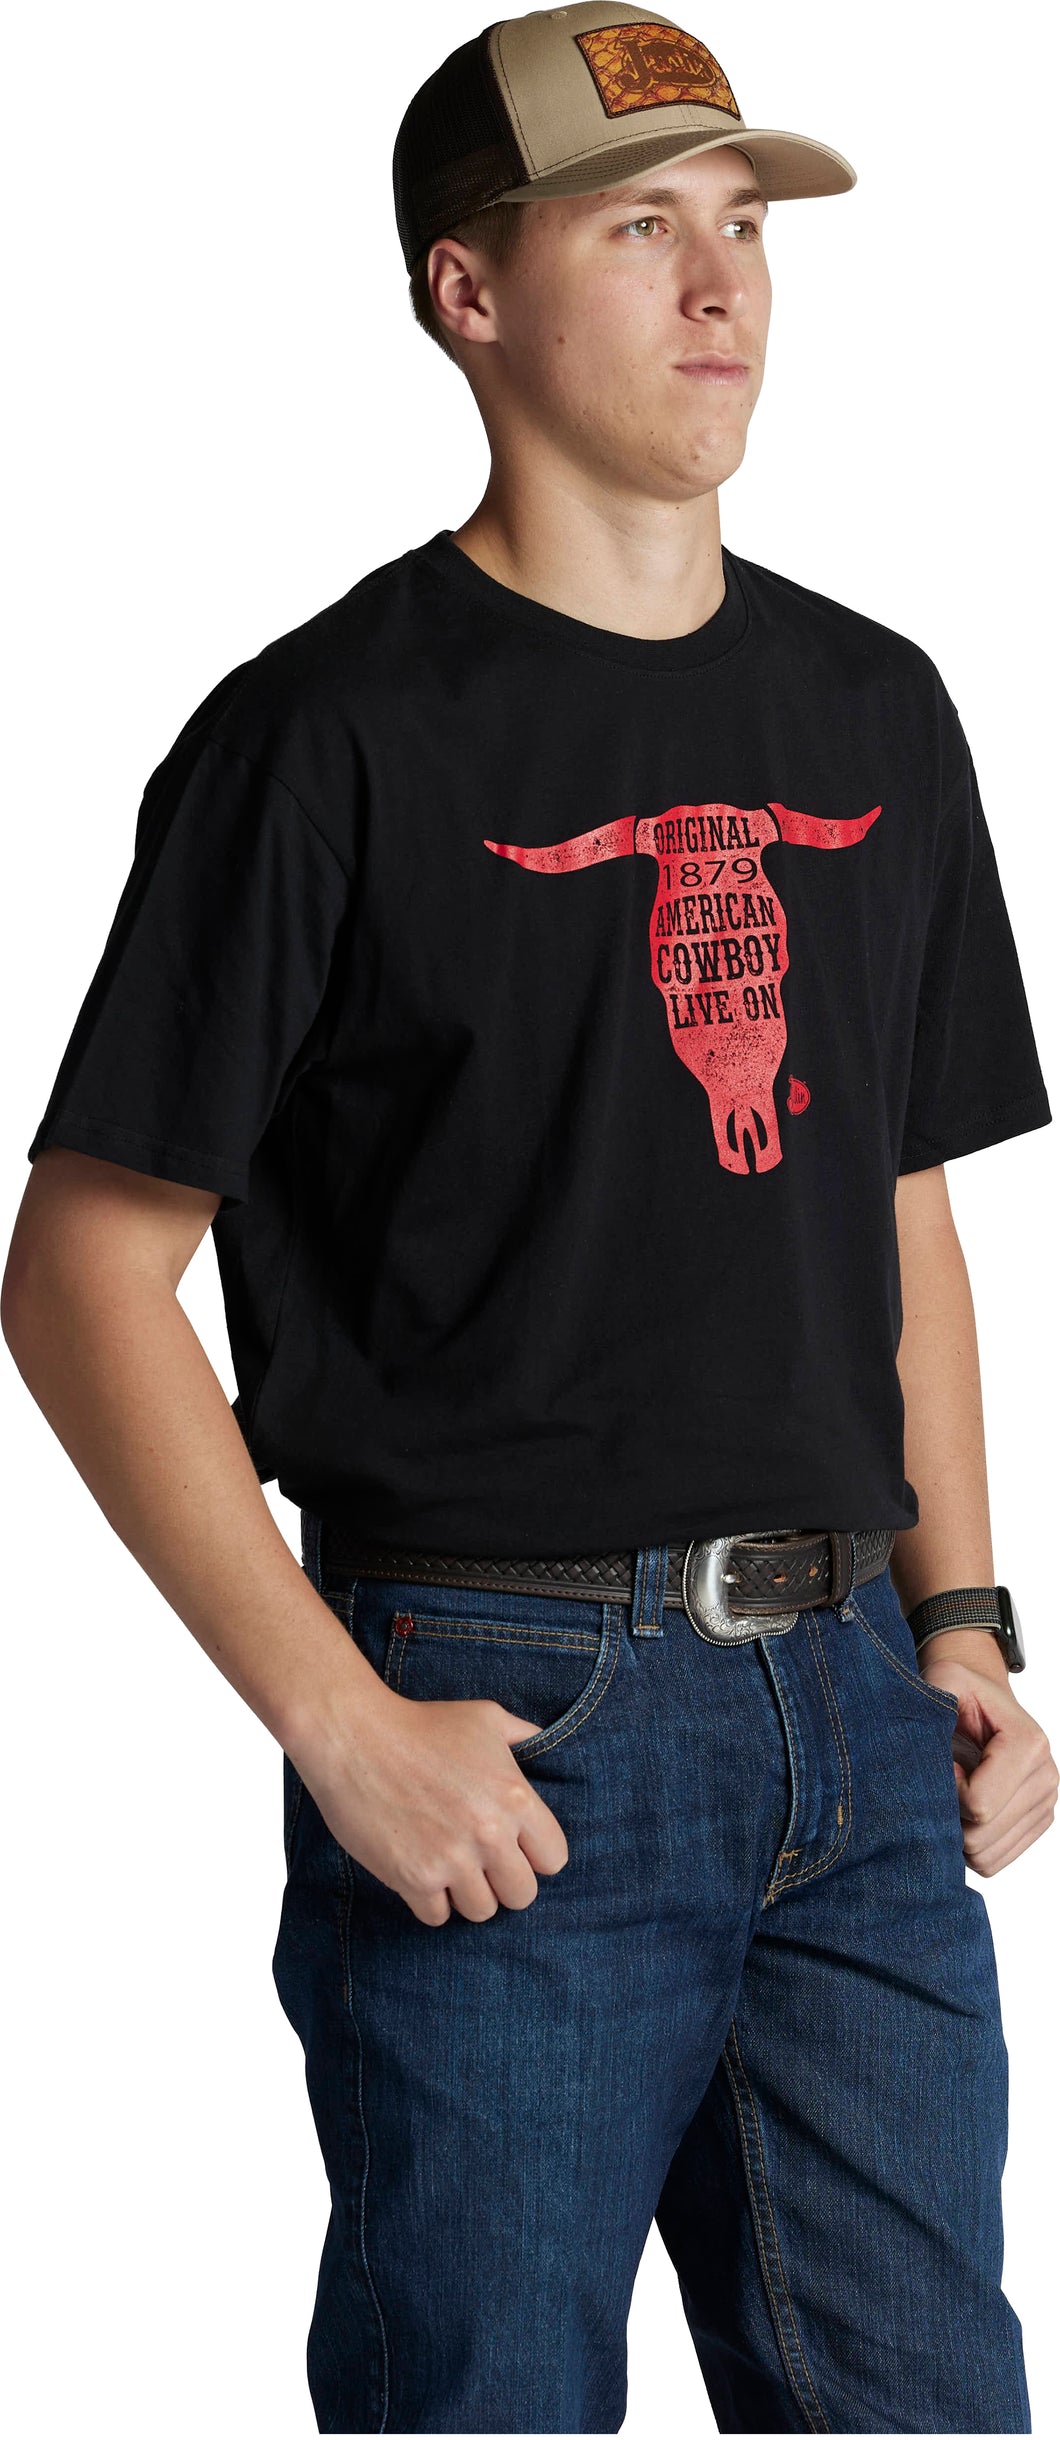 Justin Brands T-Shirt G-3176 Cowboy Live On in Black